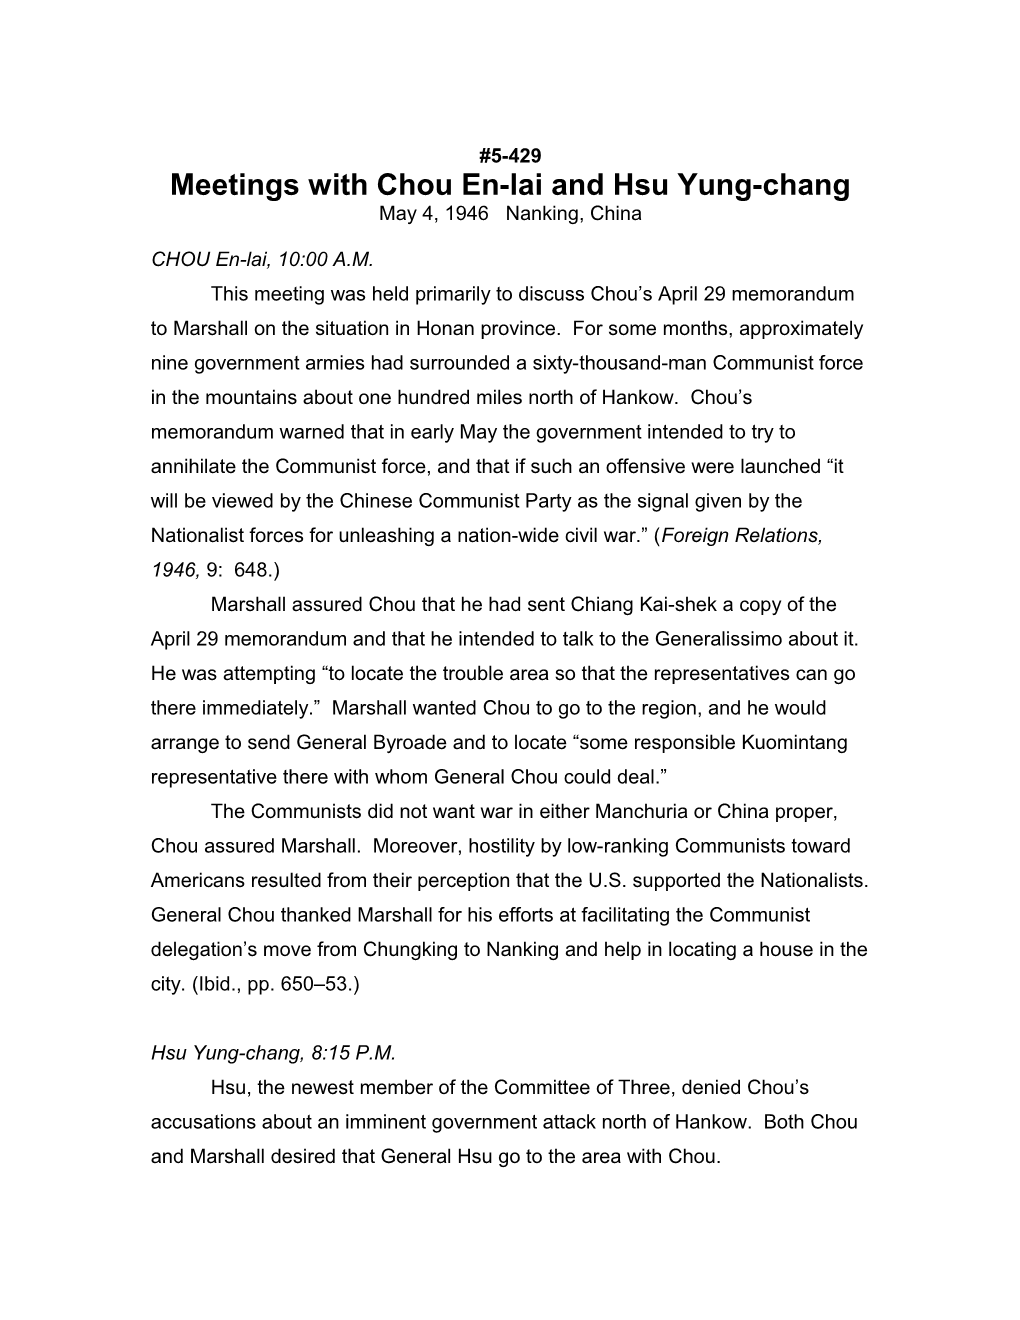 Meetings with Chou En-Lai and Hsu Yung-Chang